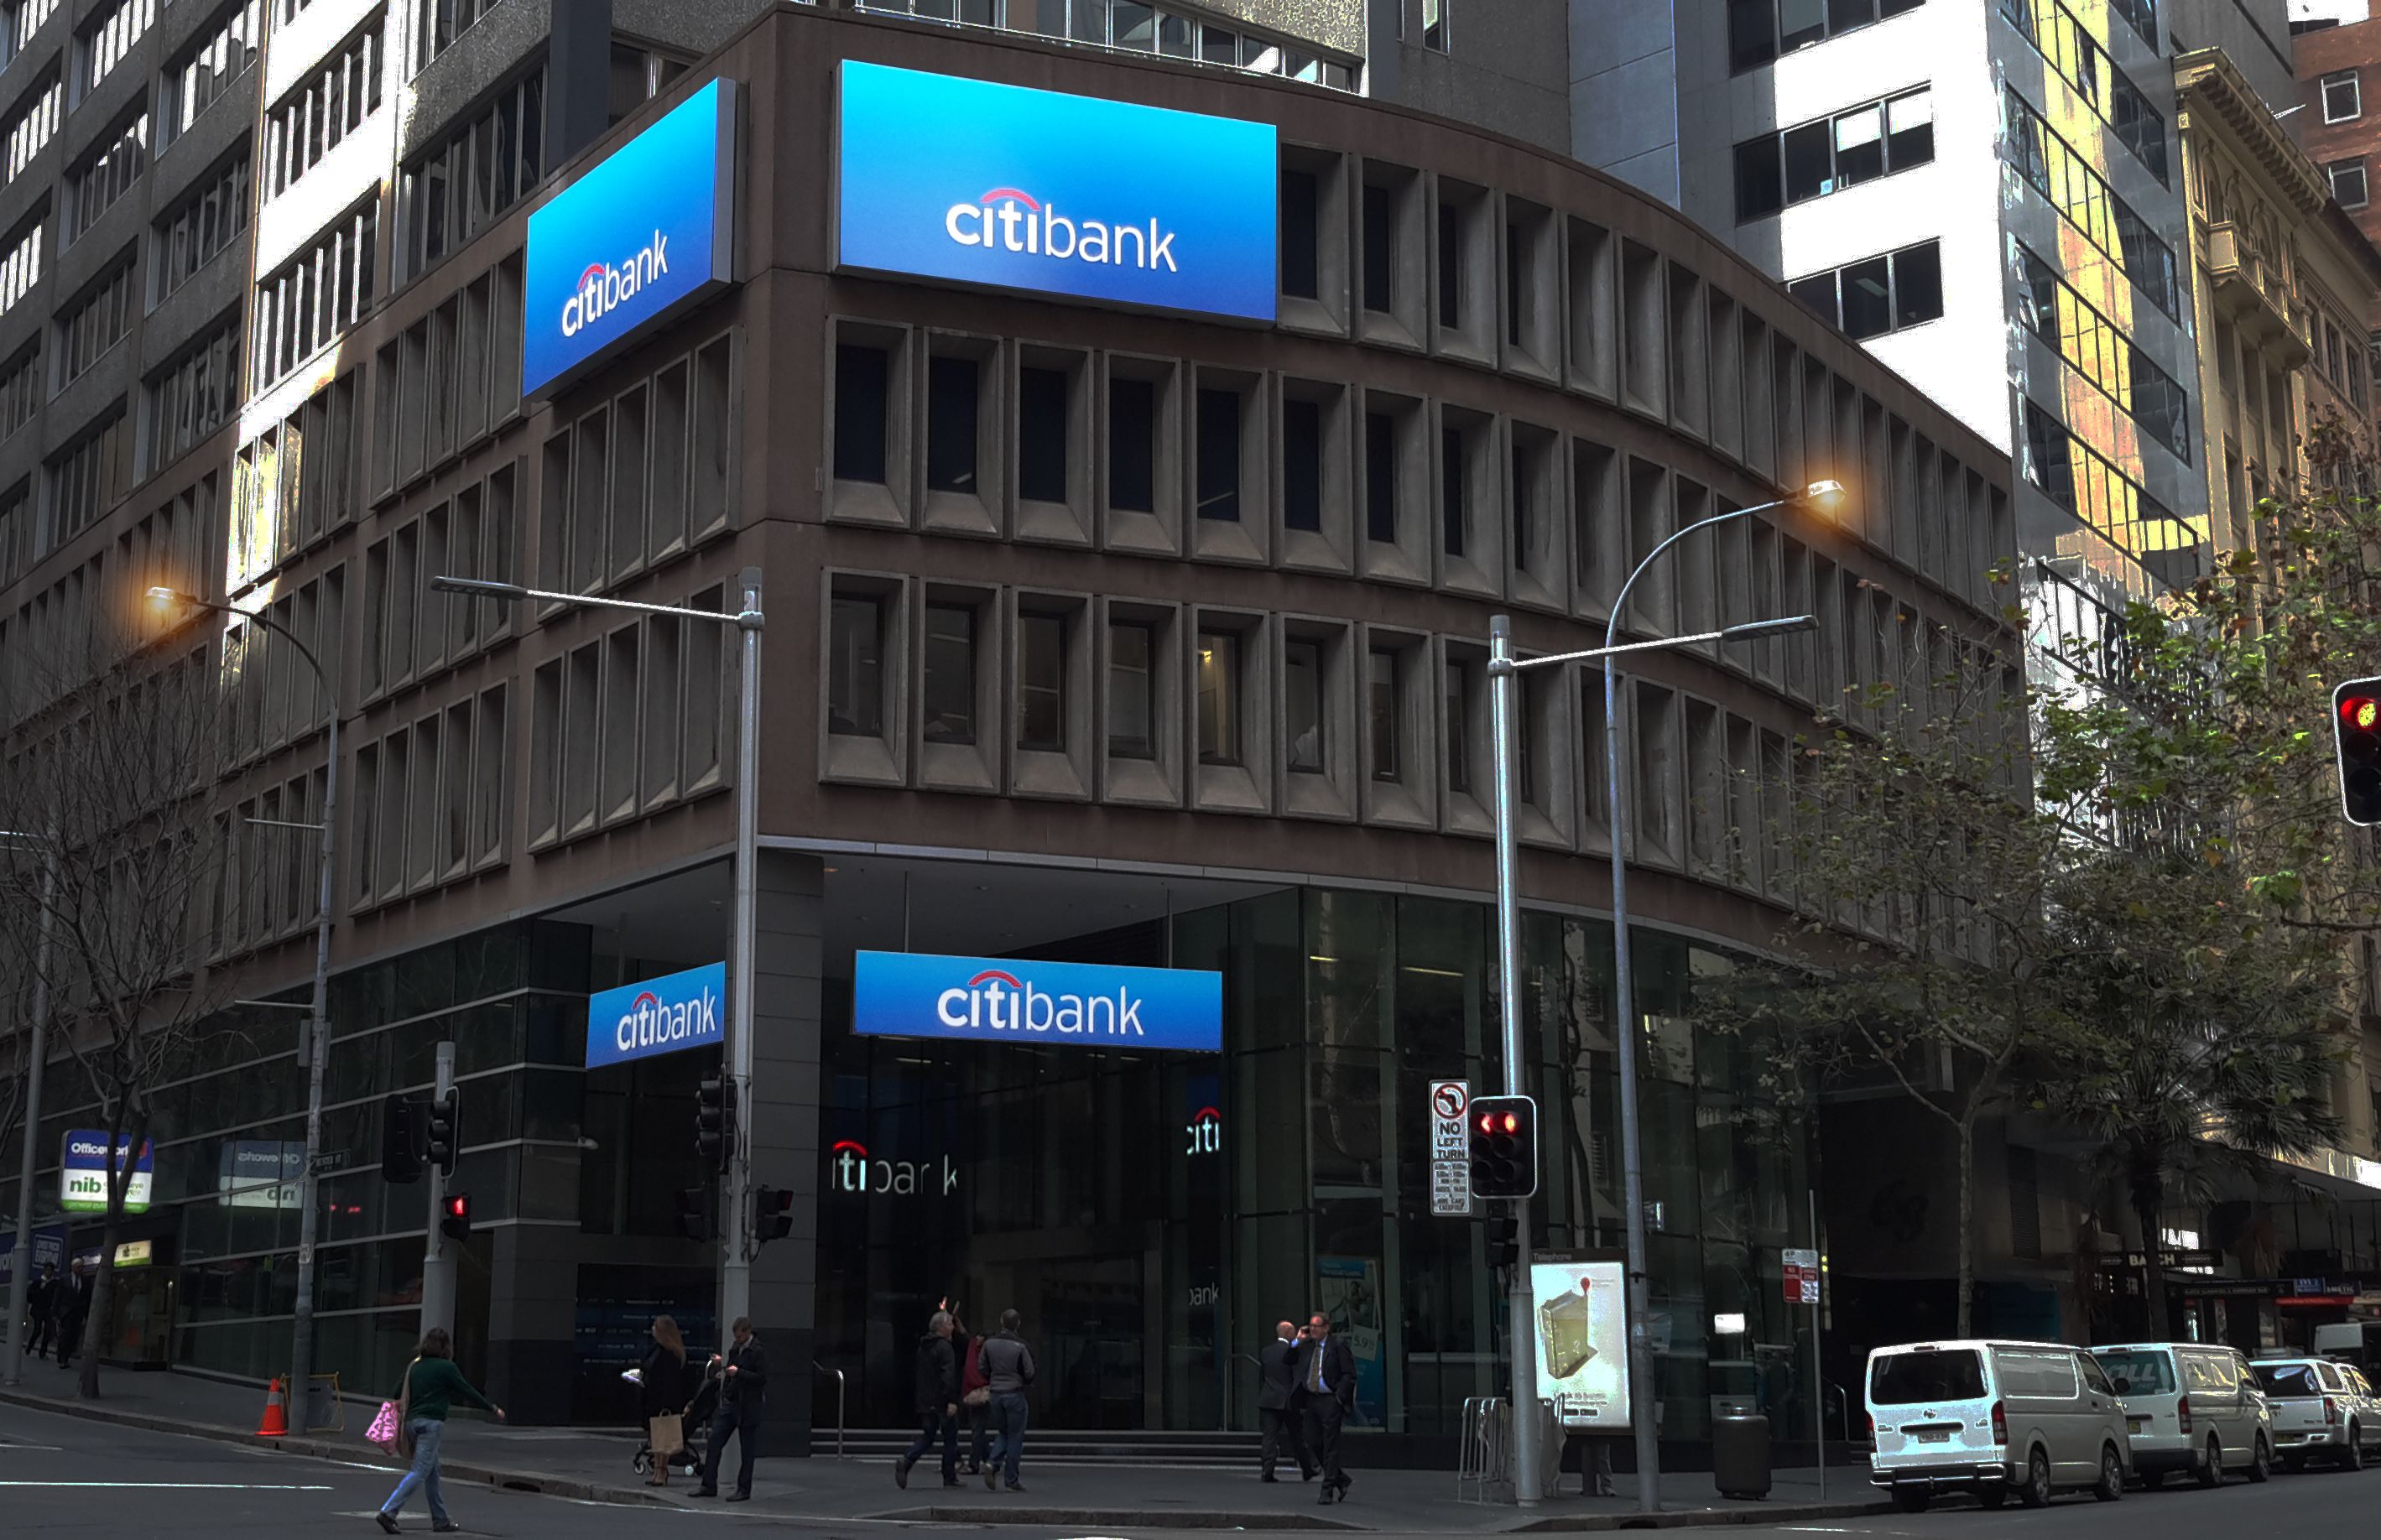 Citibank Lightbox Sign